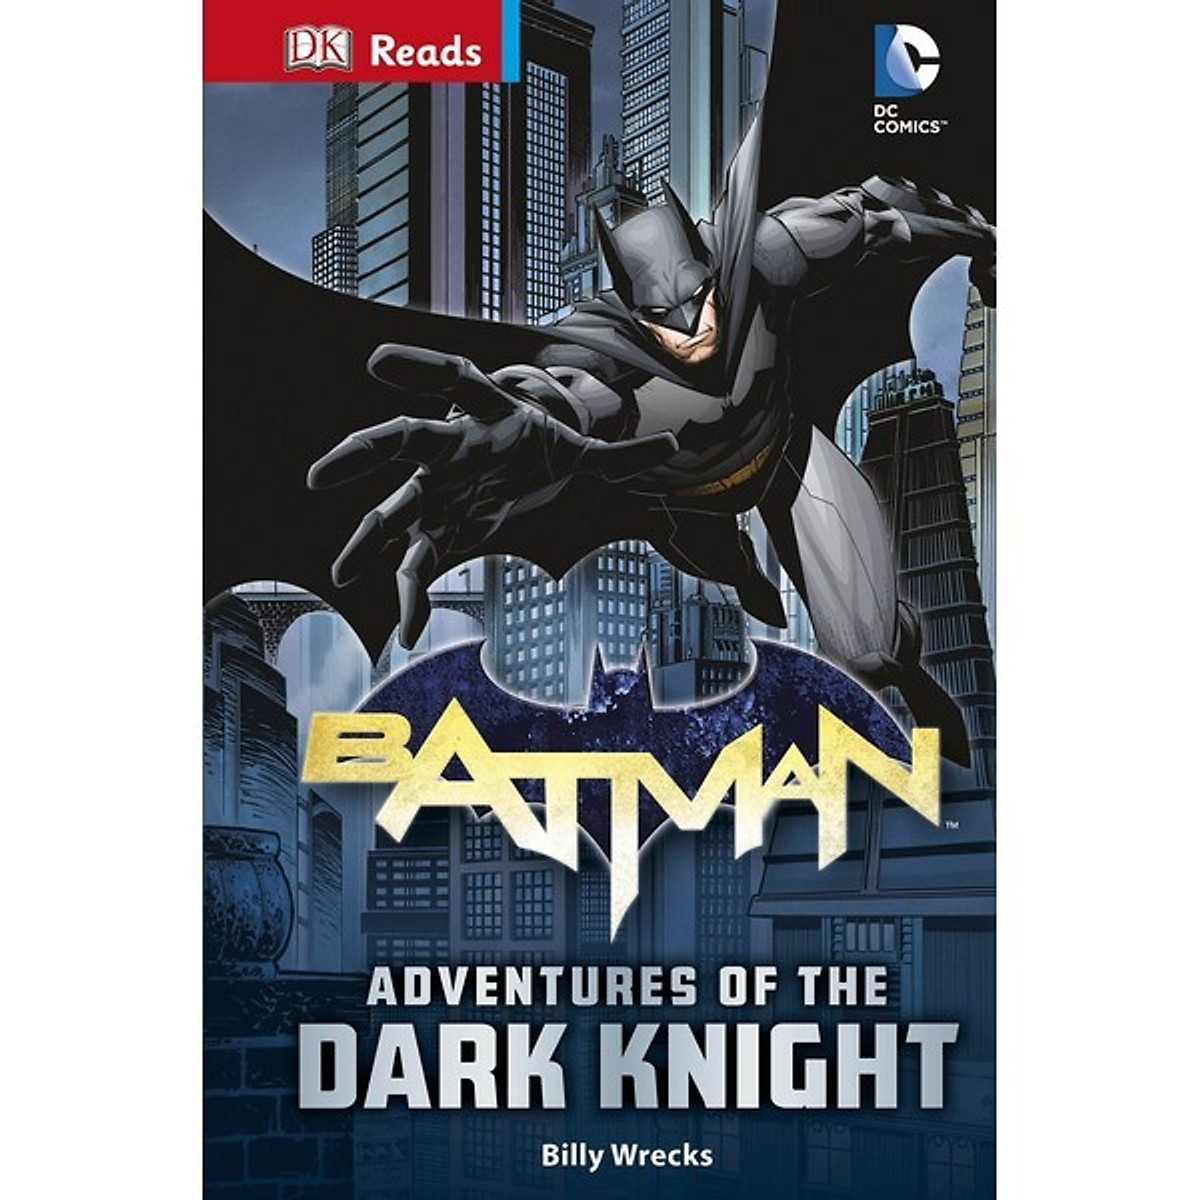 Mua DC Comics: Batman: Adventures of the Dark Knight**